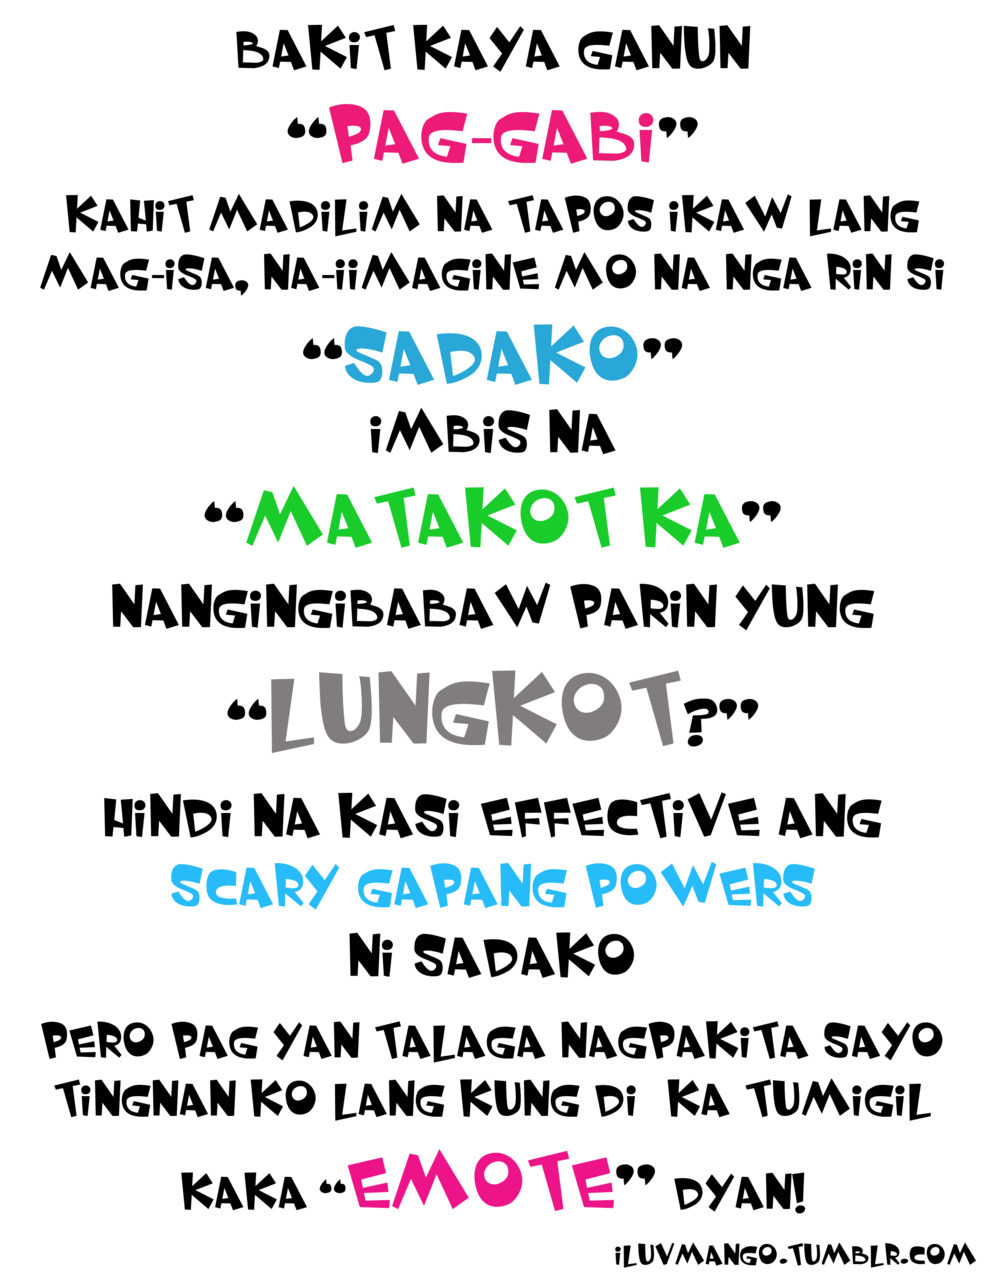 ... quotes # tagalog love quo # tagalog love quotes # quotes # love quotes